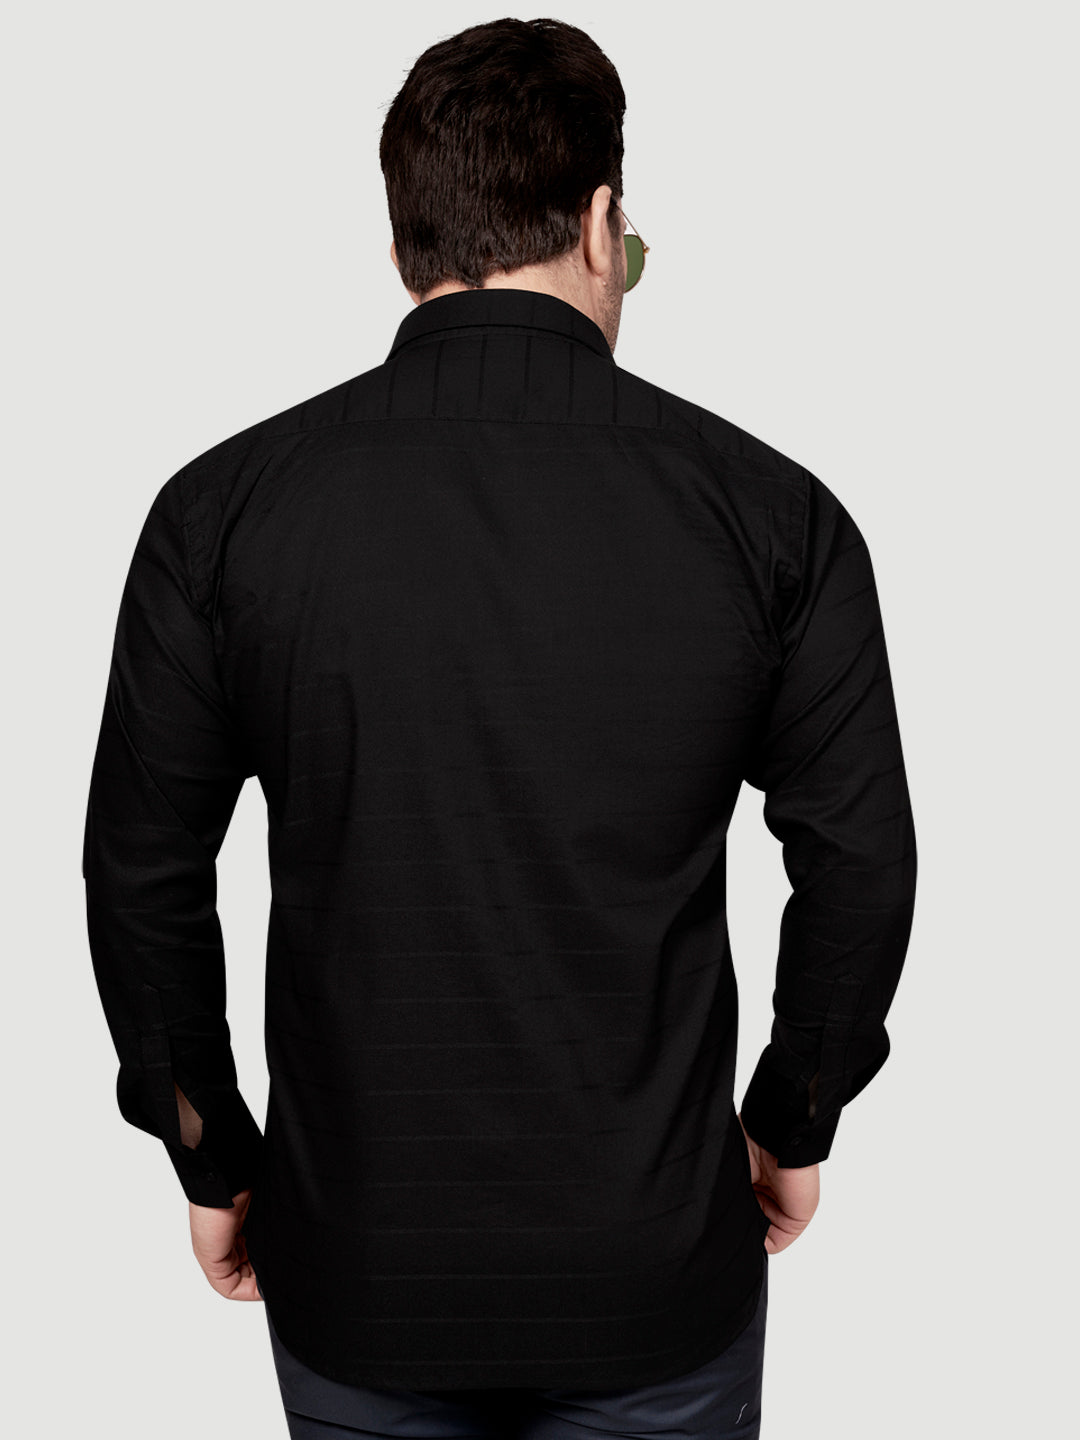 Black and White Men's Designer Shirt with Collar Accessory & Designer Broach Black